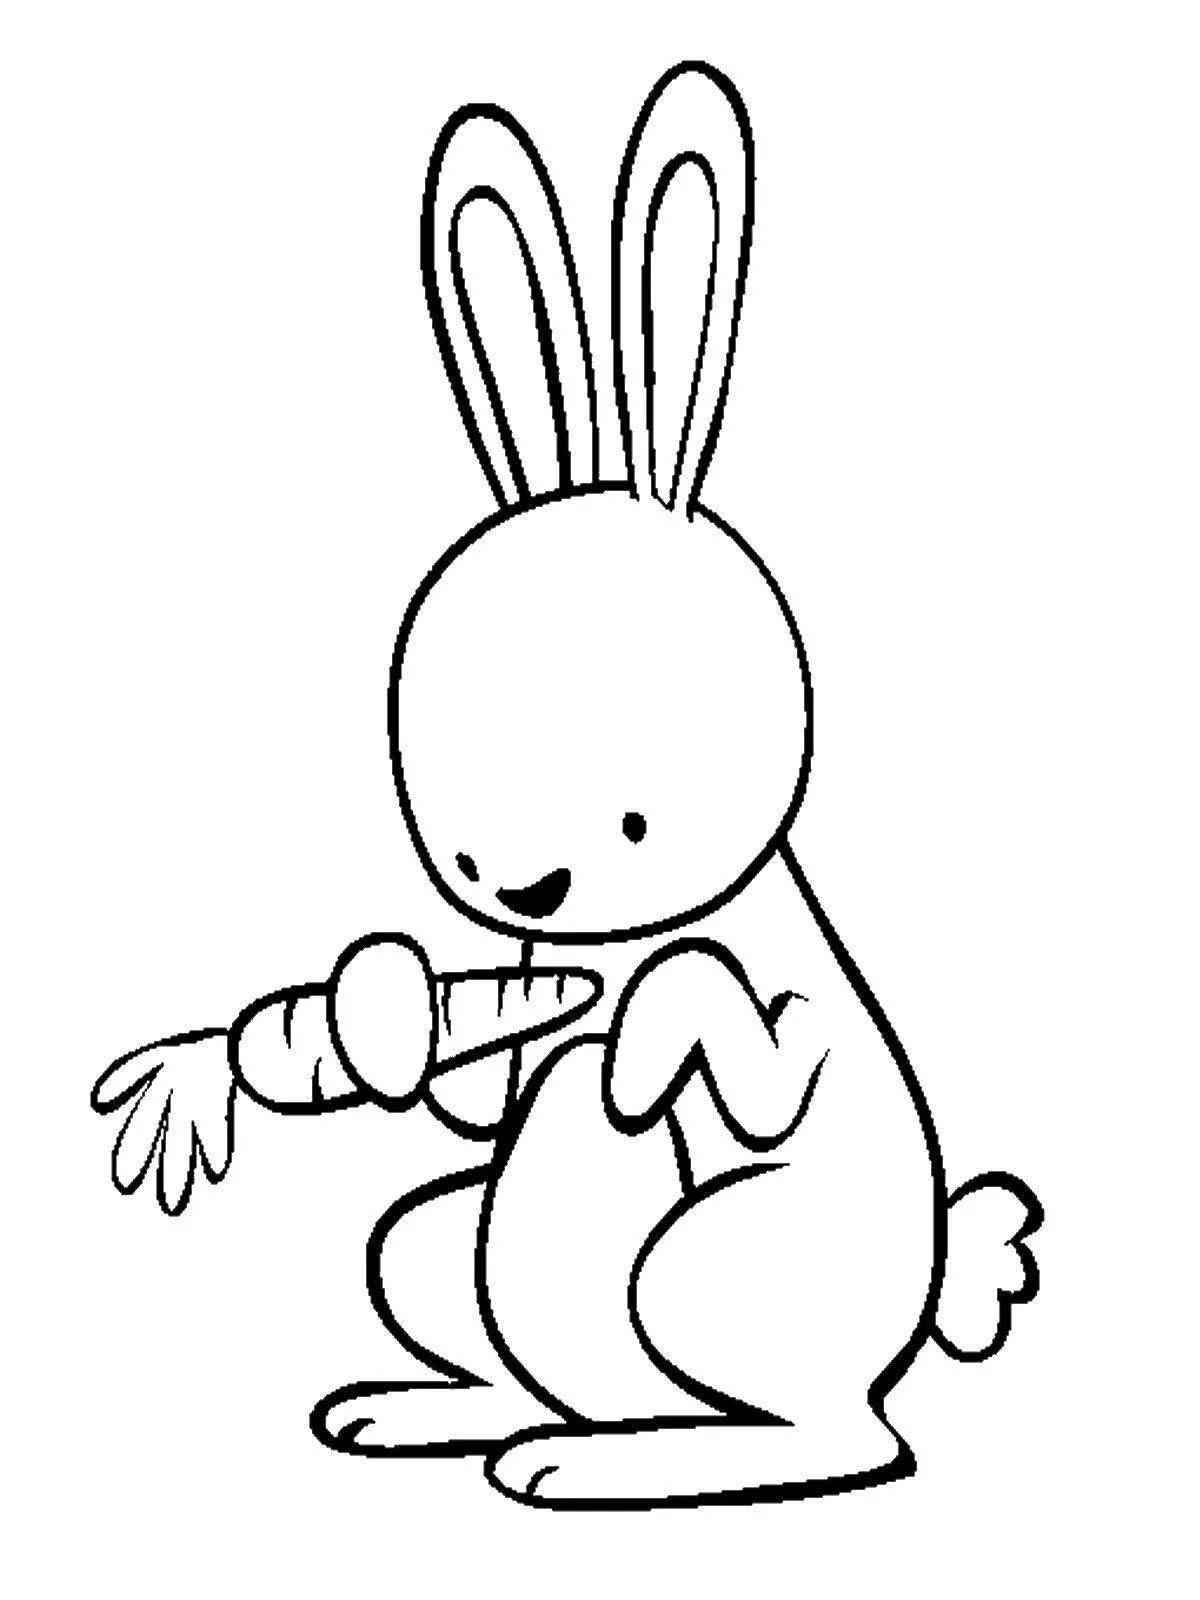 Animated coloring book rabbit man